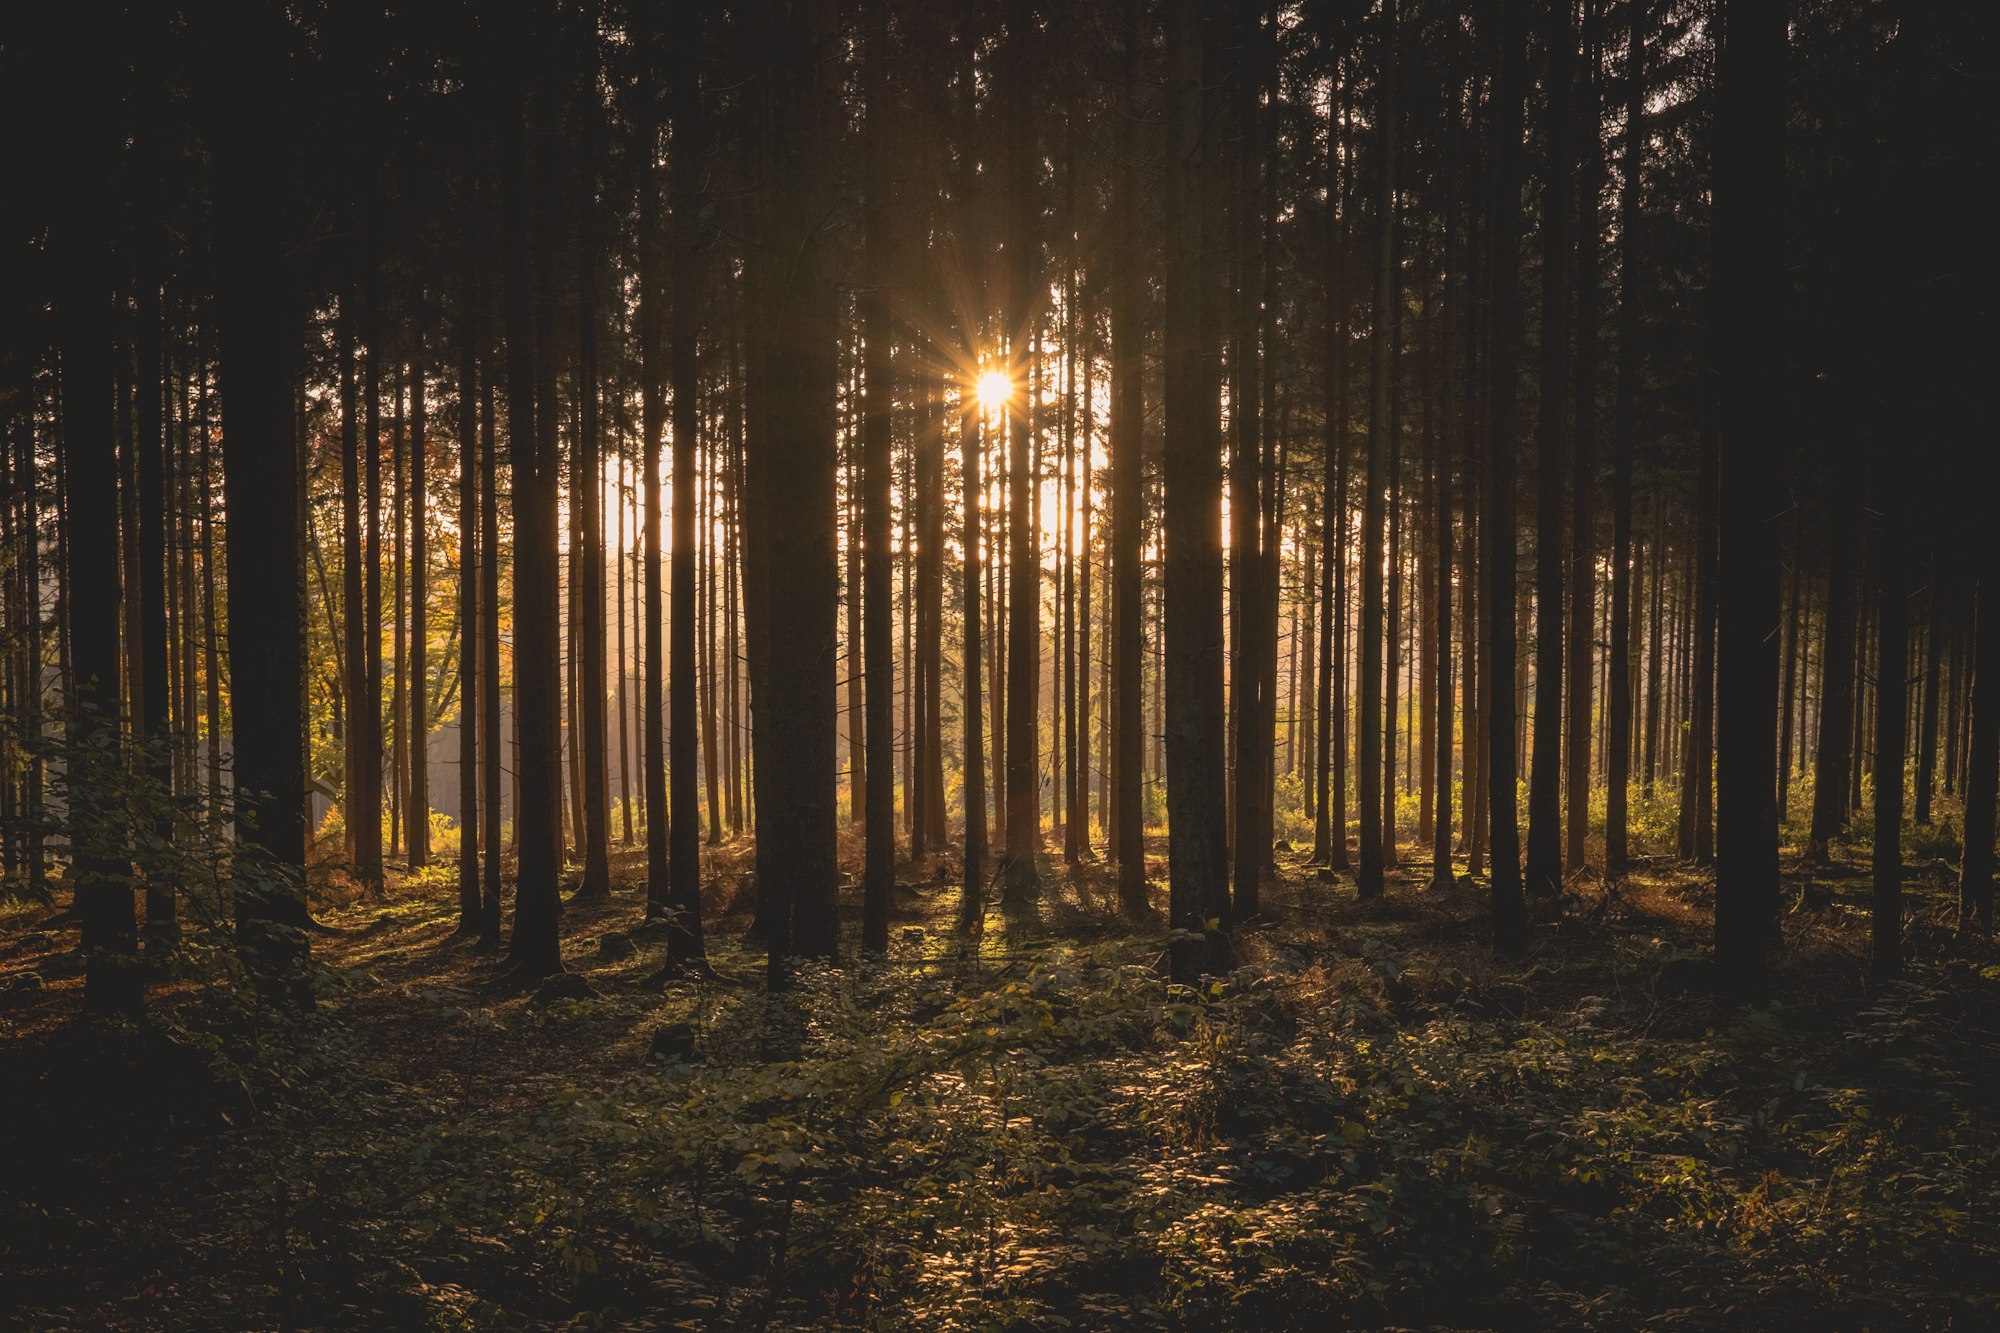 Gestion des forêts : 7 initiatives vertueuses